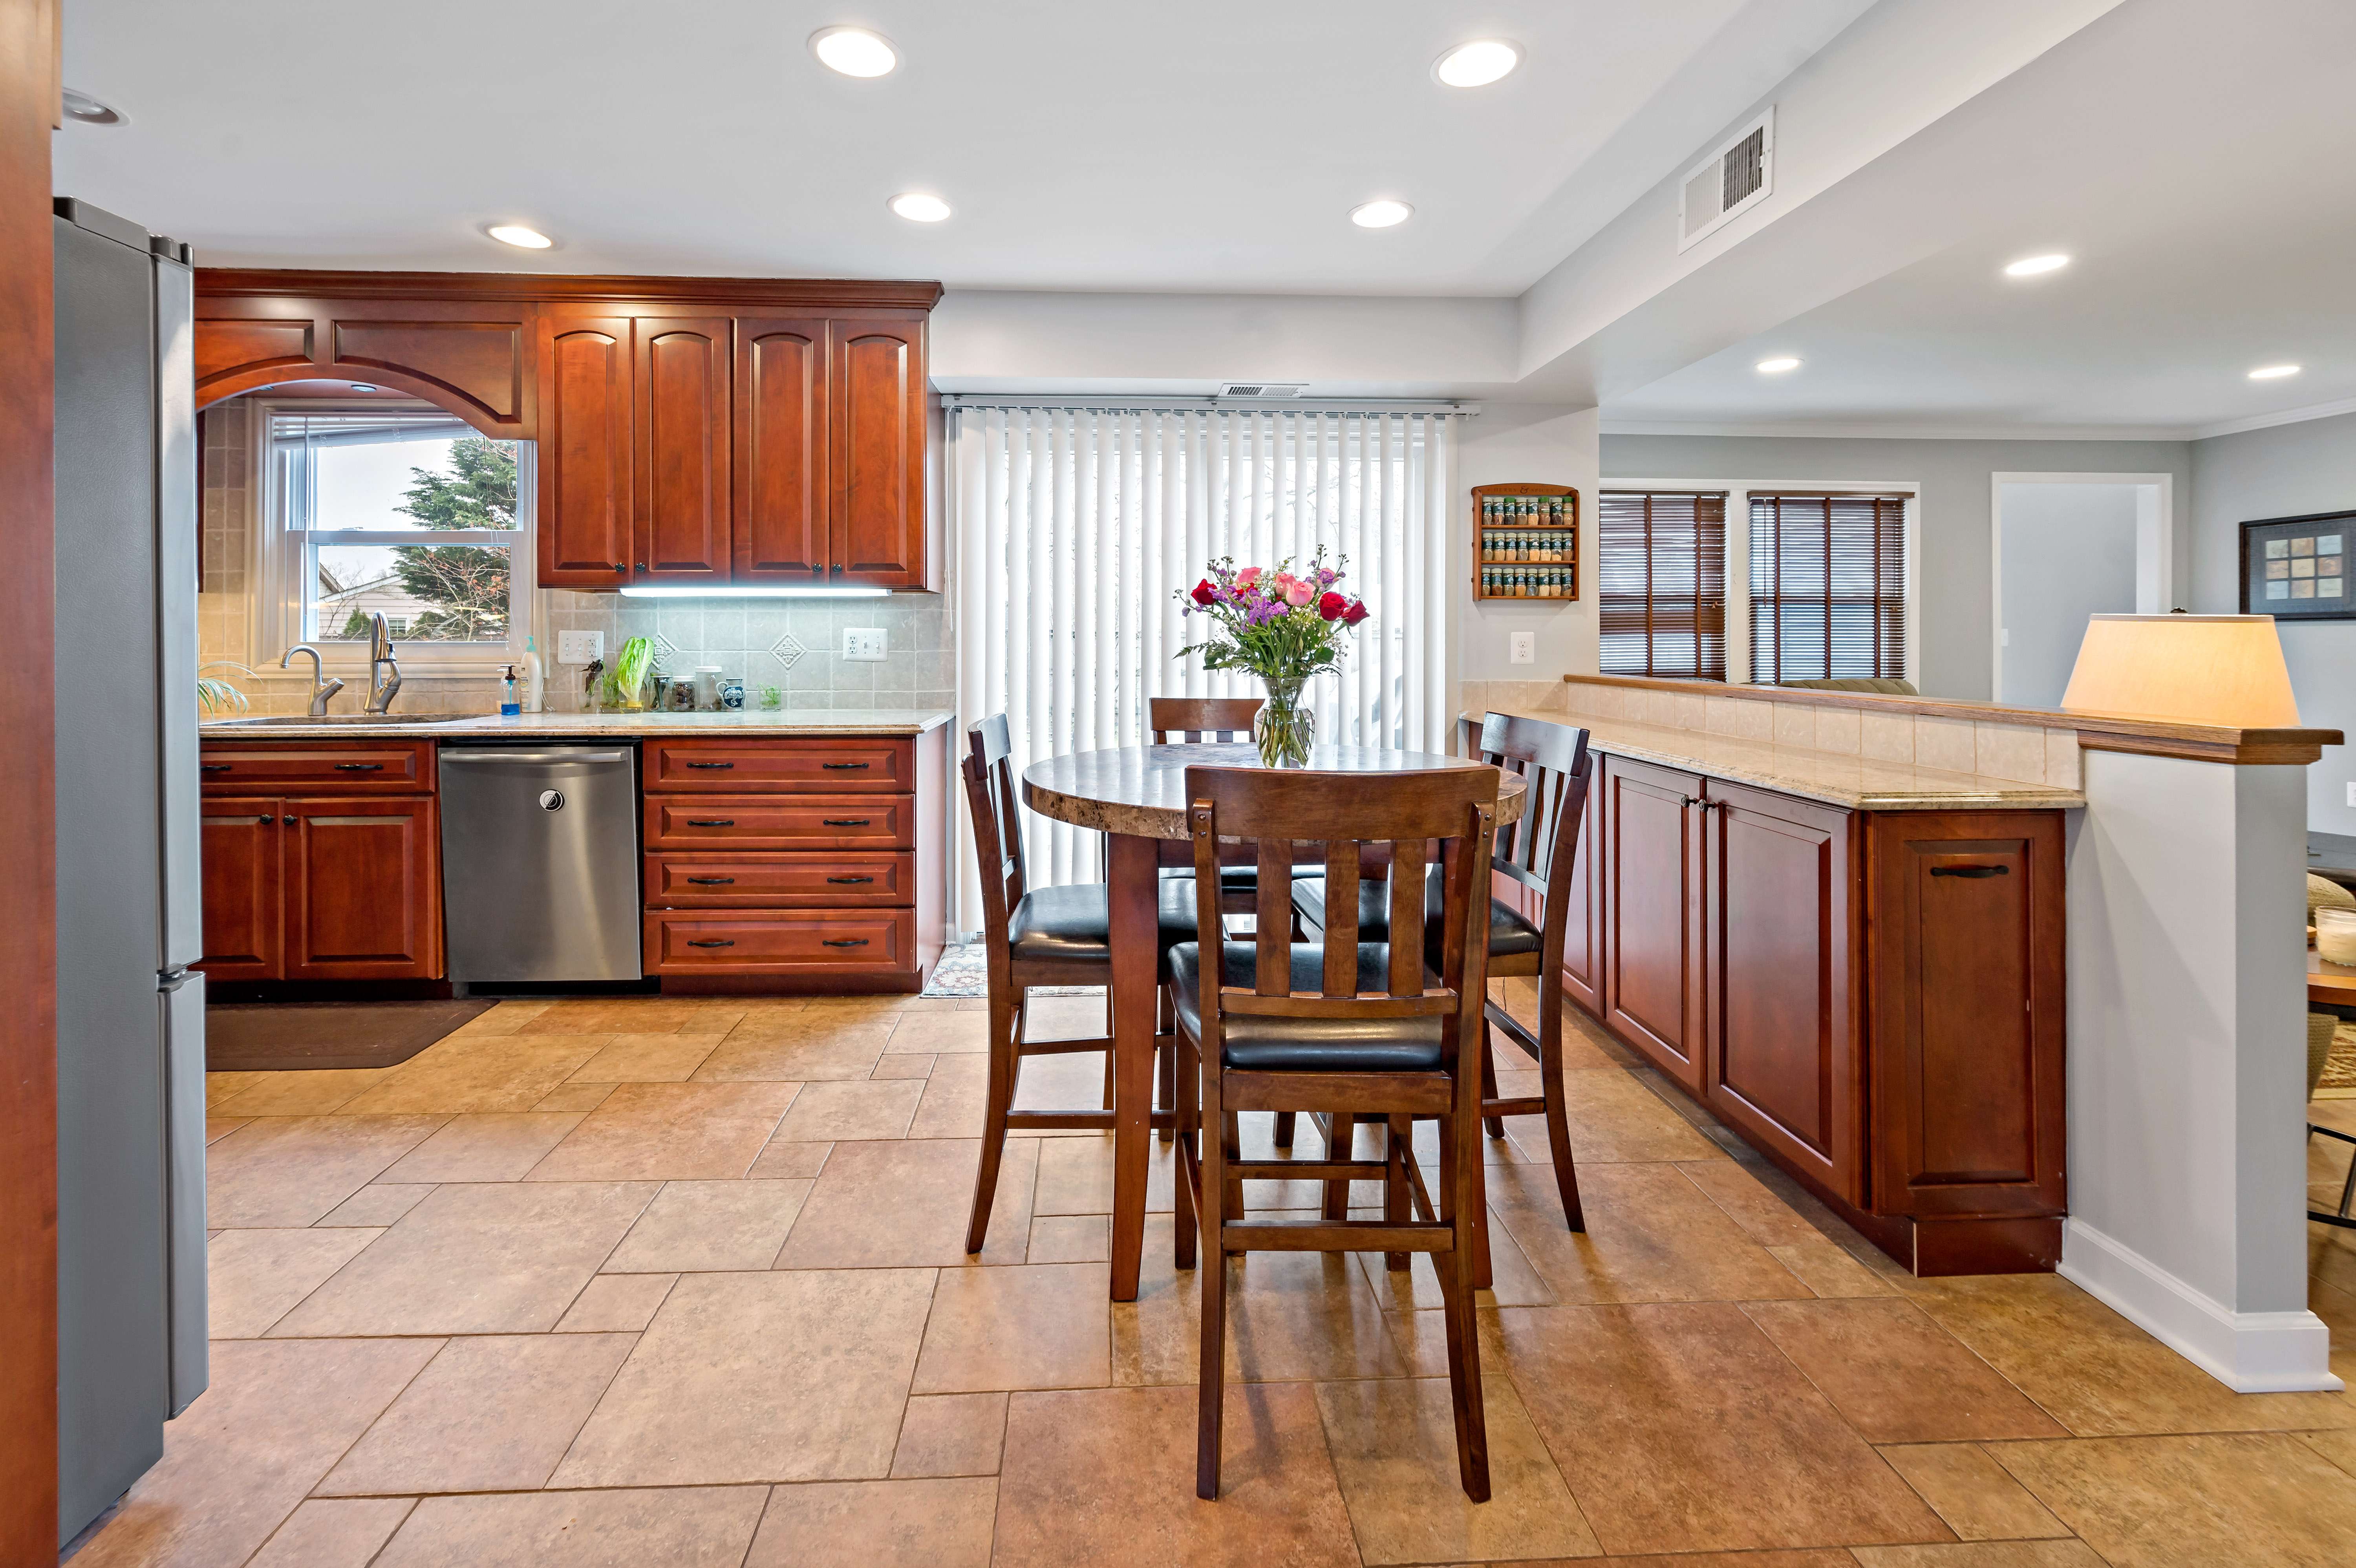 Brown tile floors in kitchen area